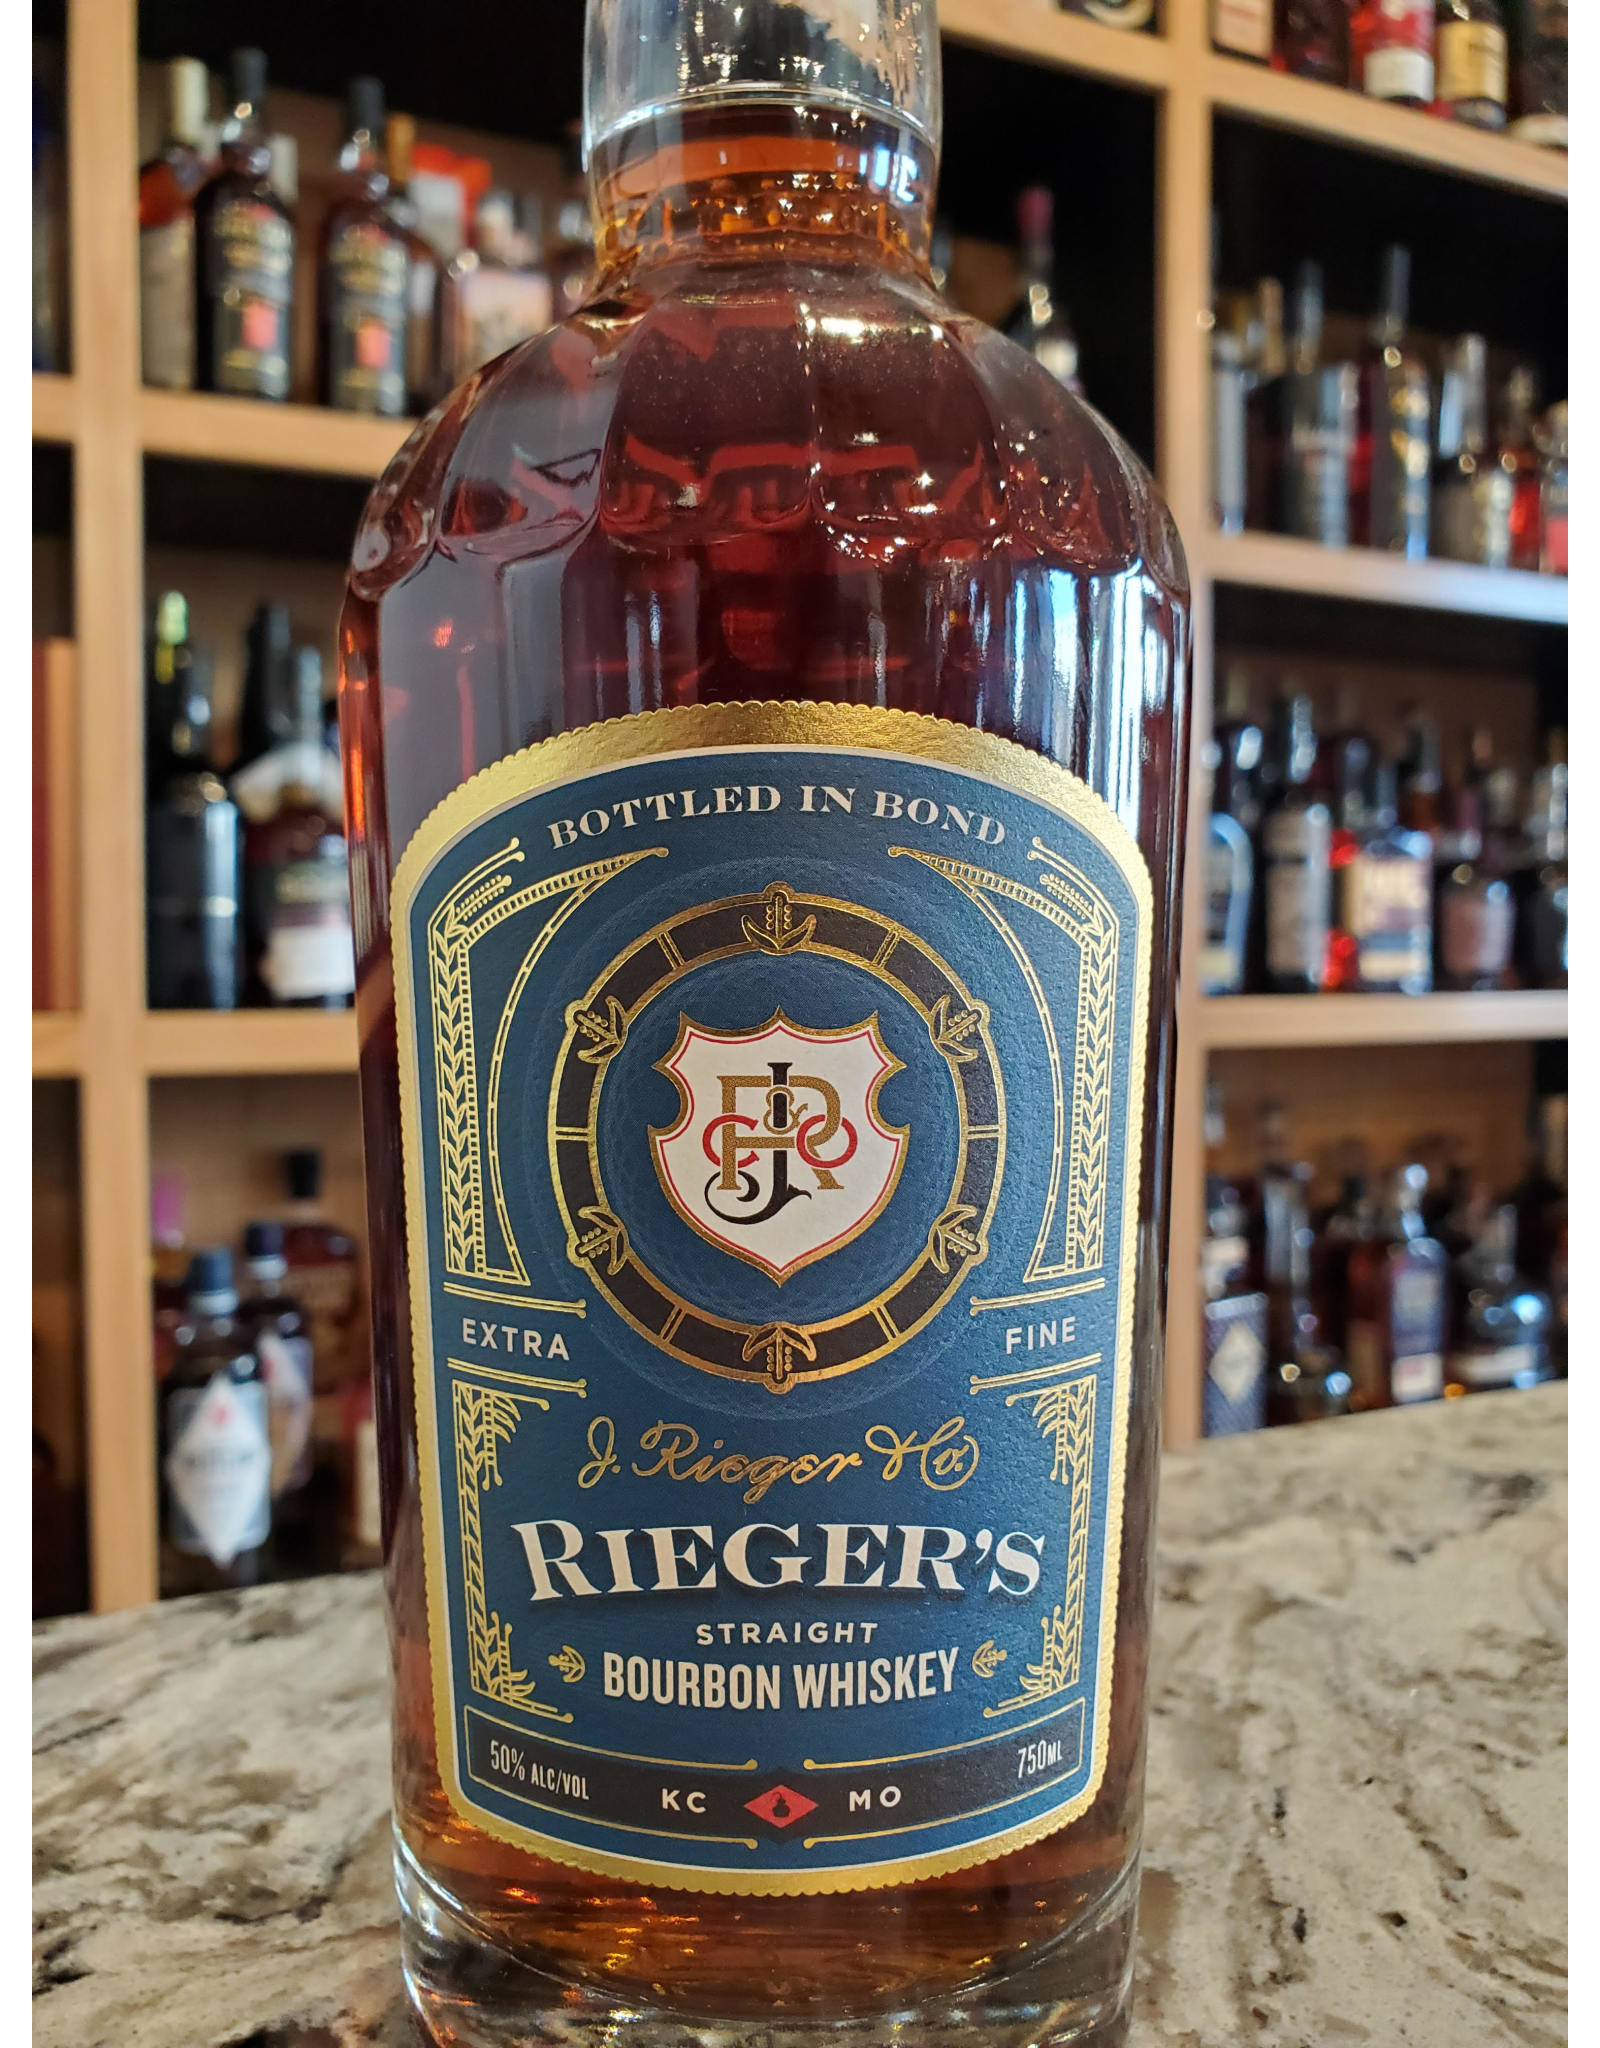 Rieger's, BIB, Bourbon